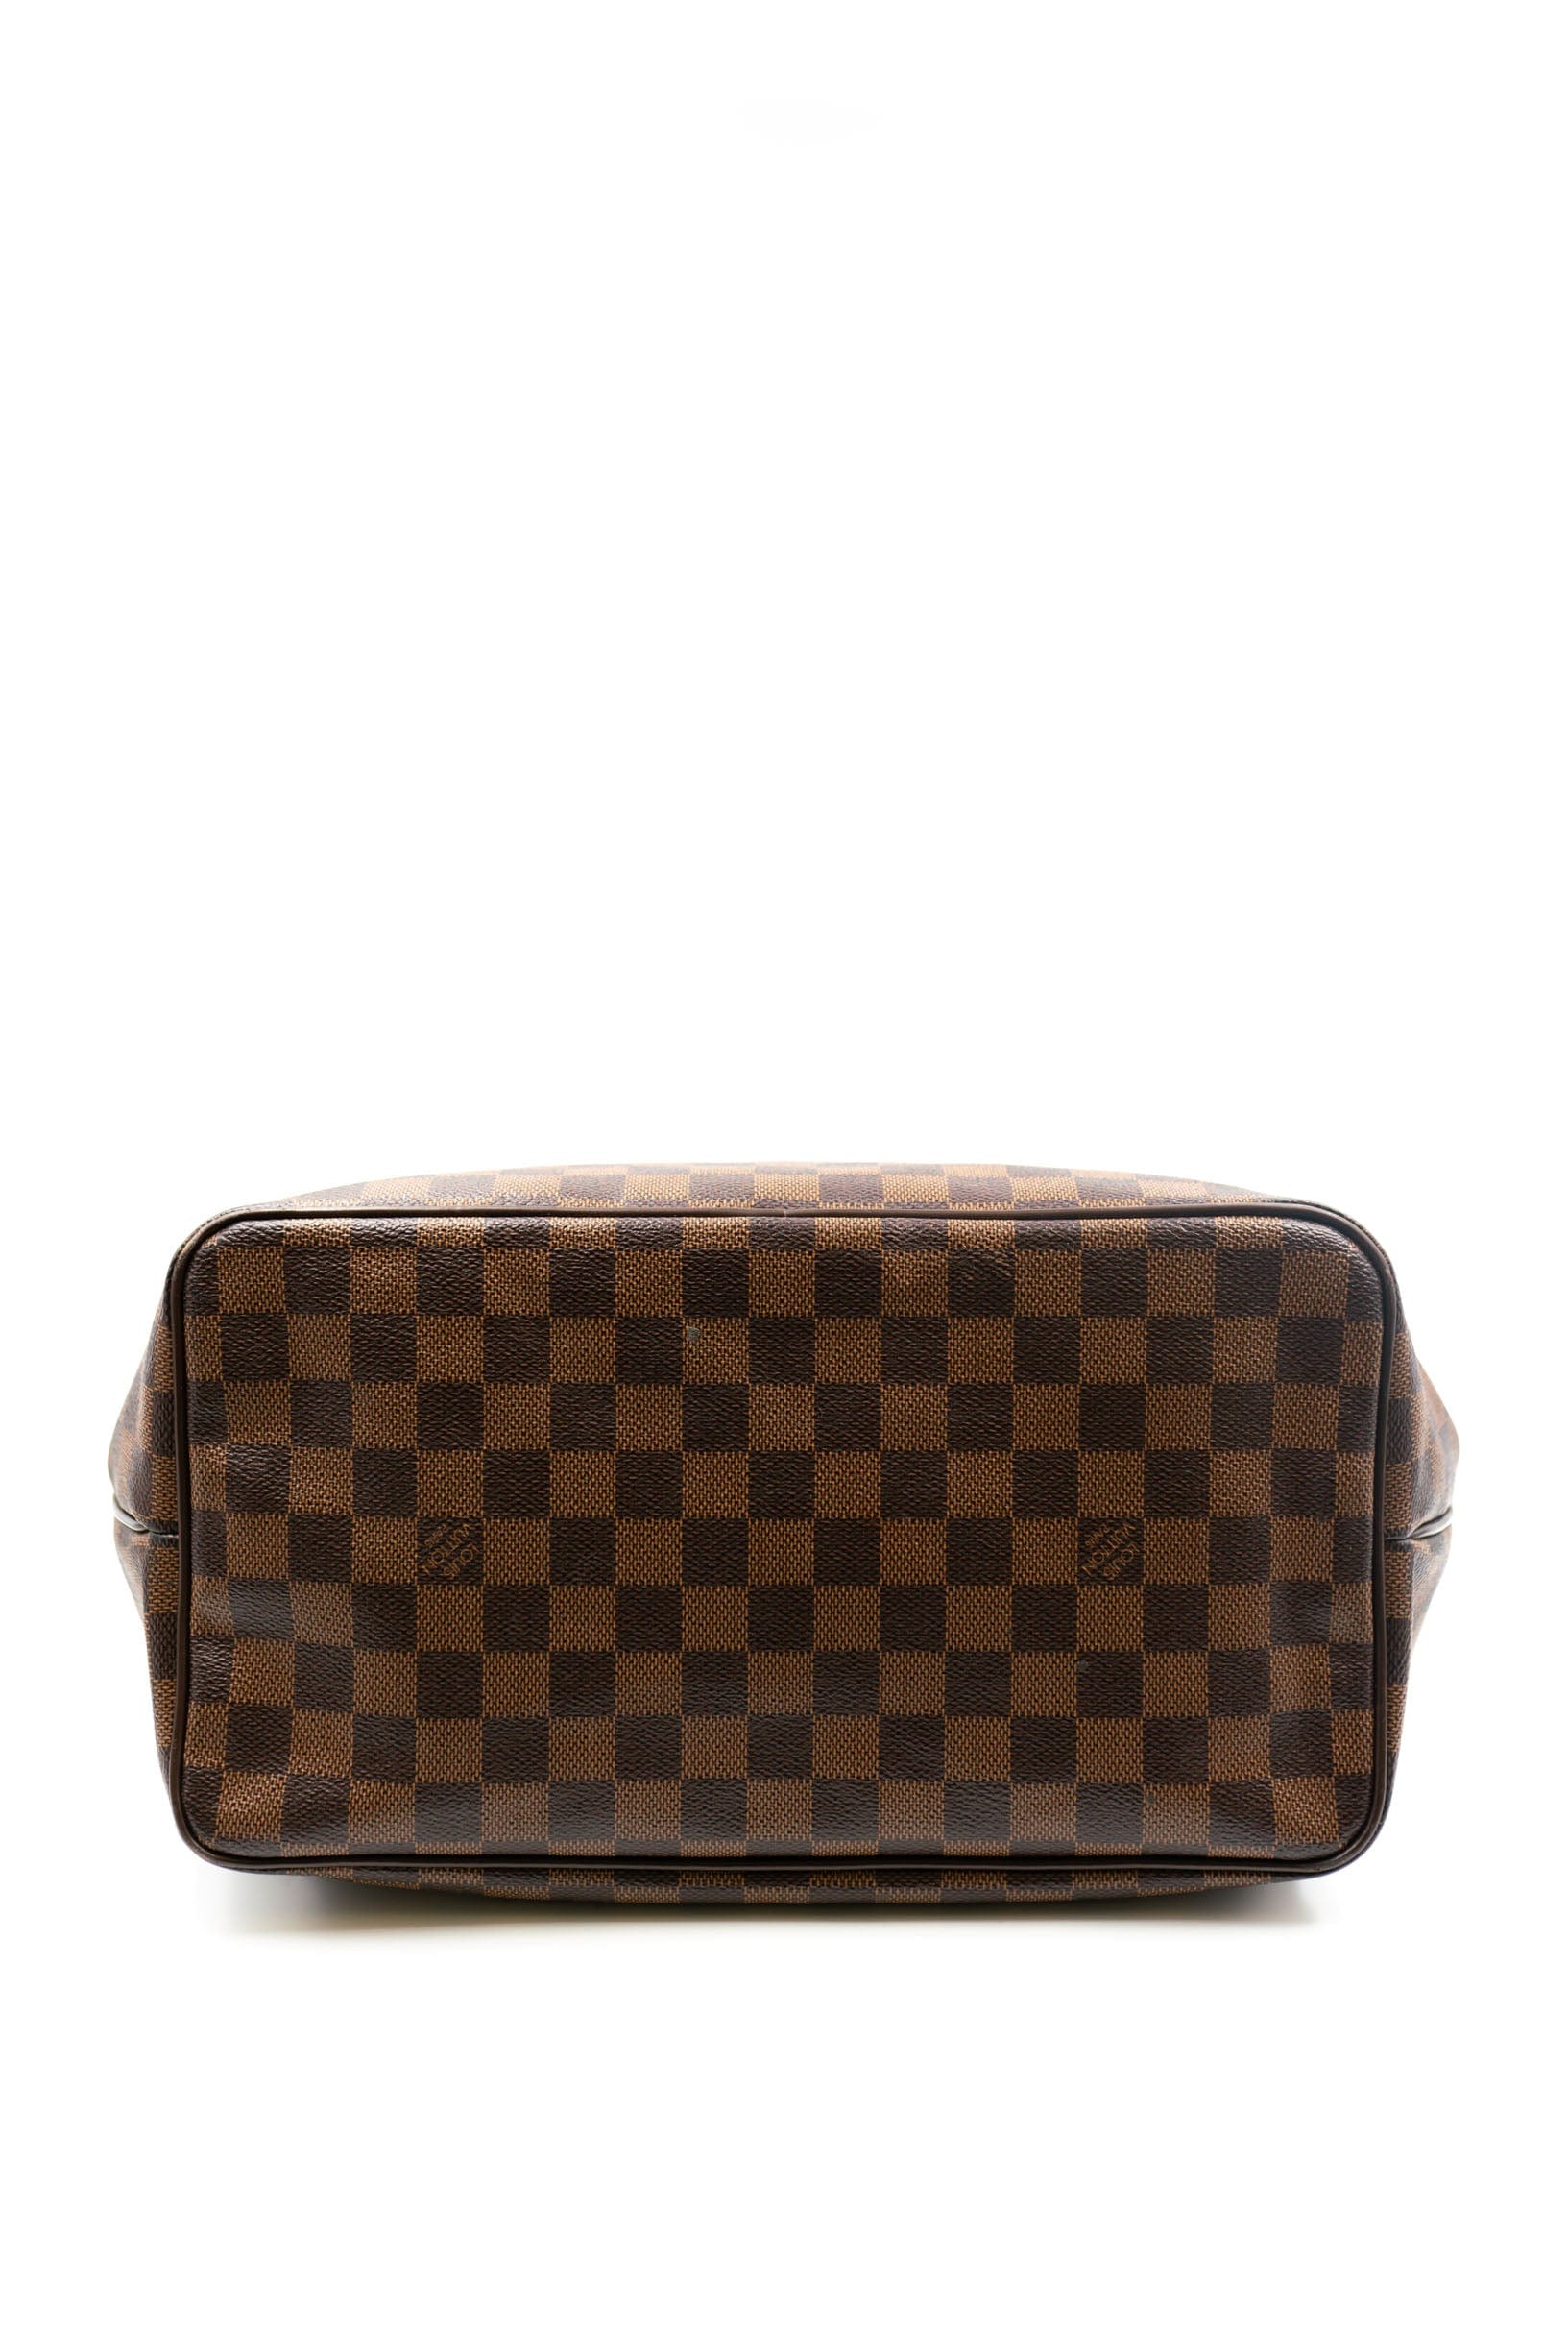 Louis Vuitton Louis Vuitton damier bag - AGC1387